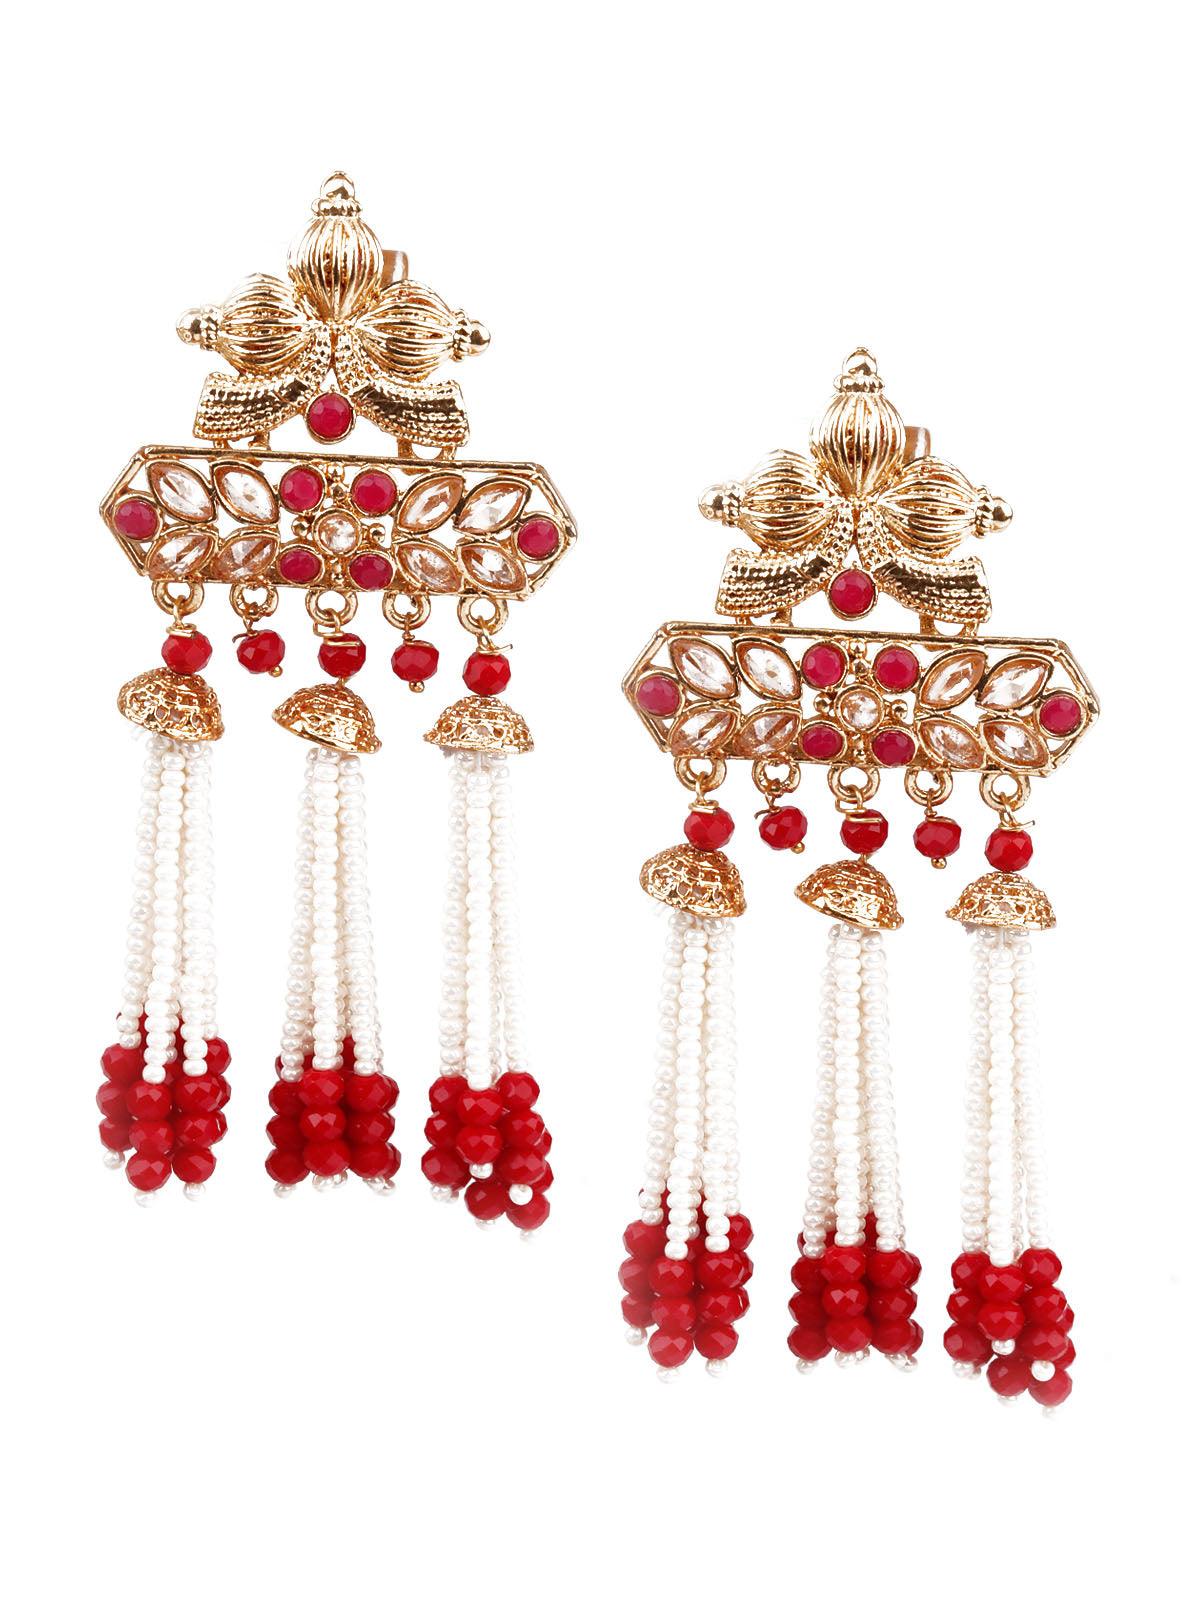 Dvaita Silver Kempu Navratna earrings -Buy Silver Gold Plated Jewellery  Online — KO Jewellery